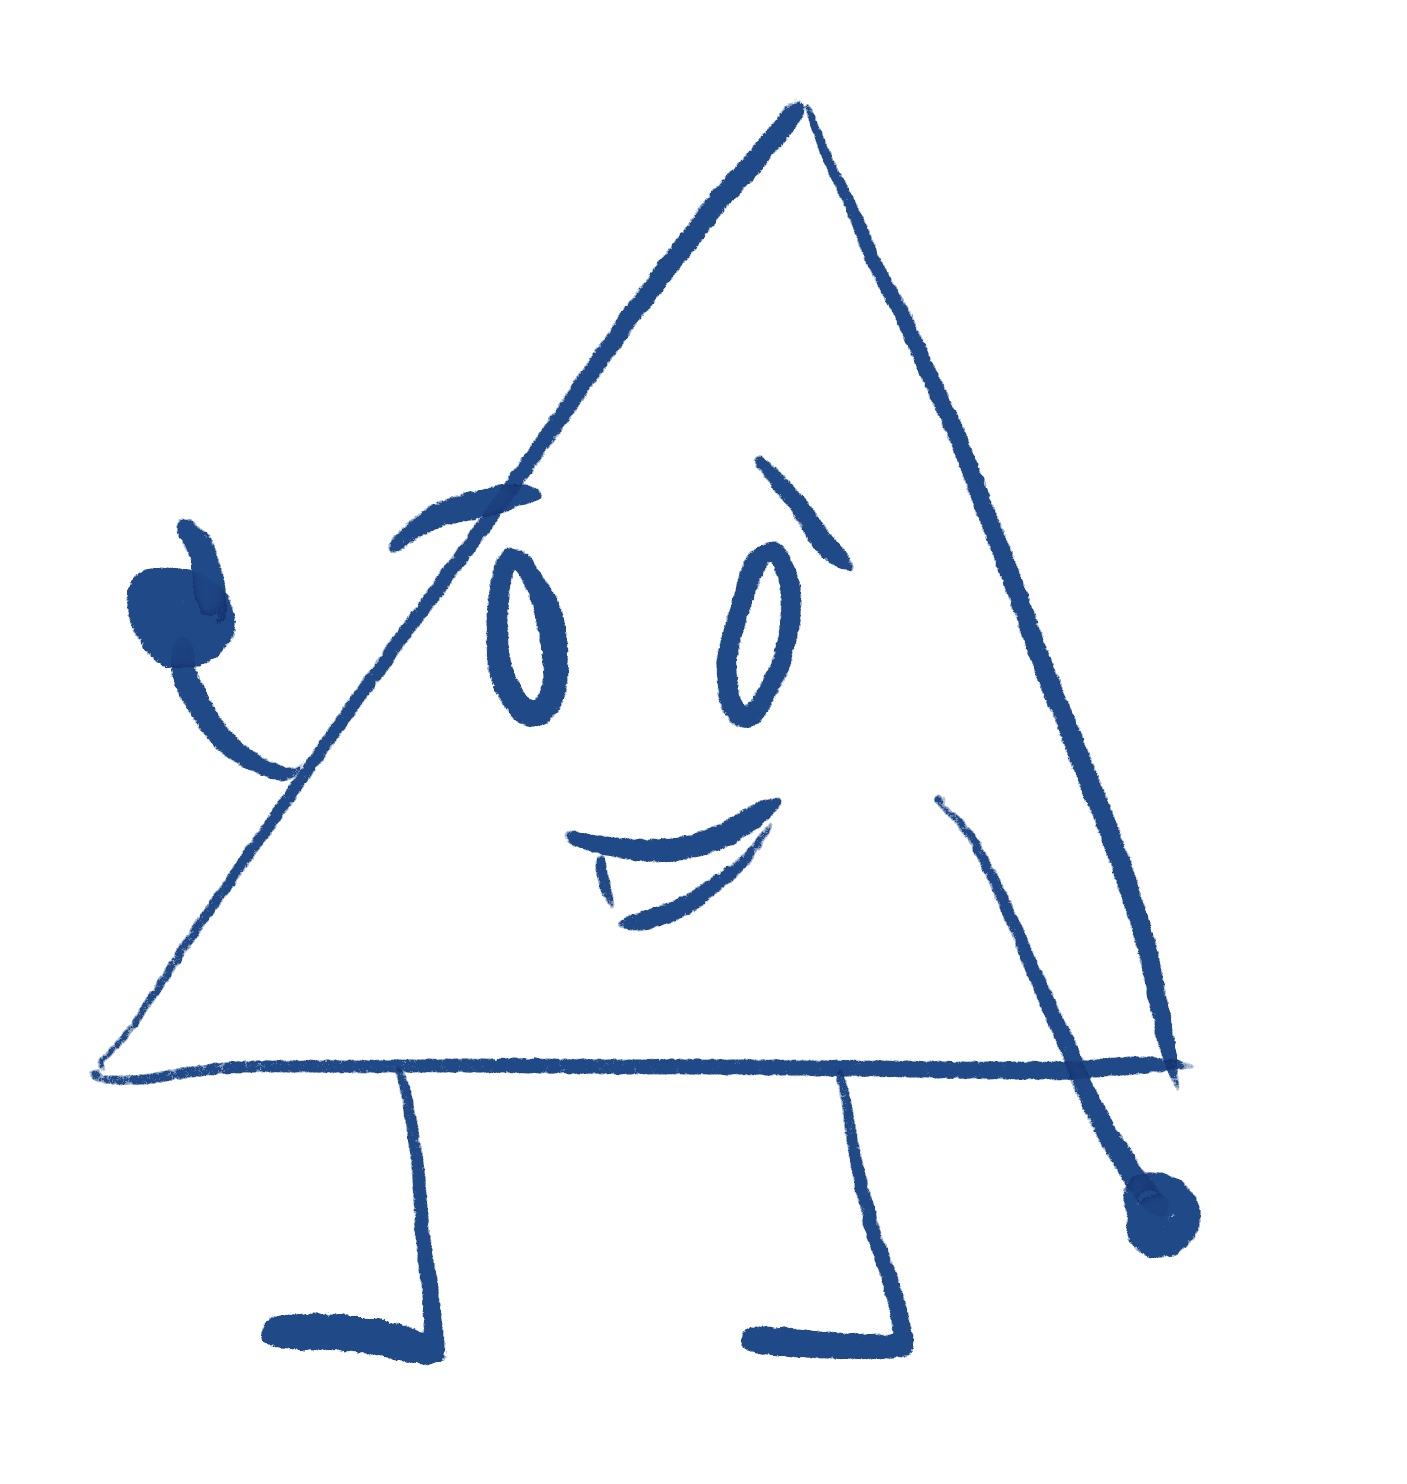 triangle diagram